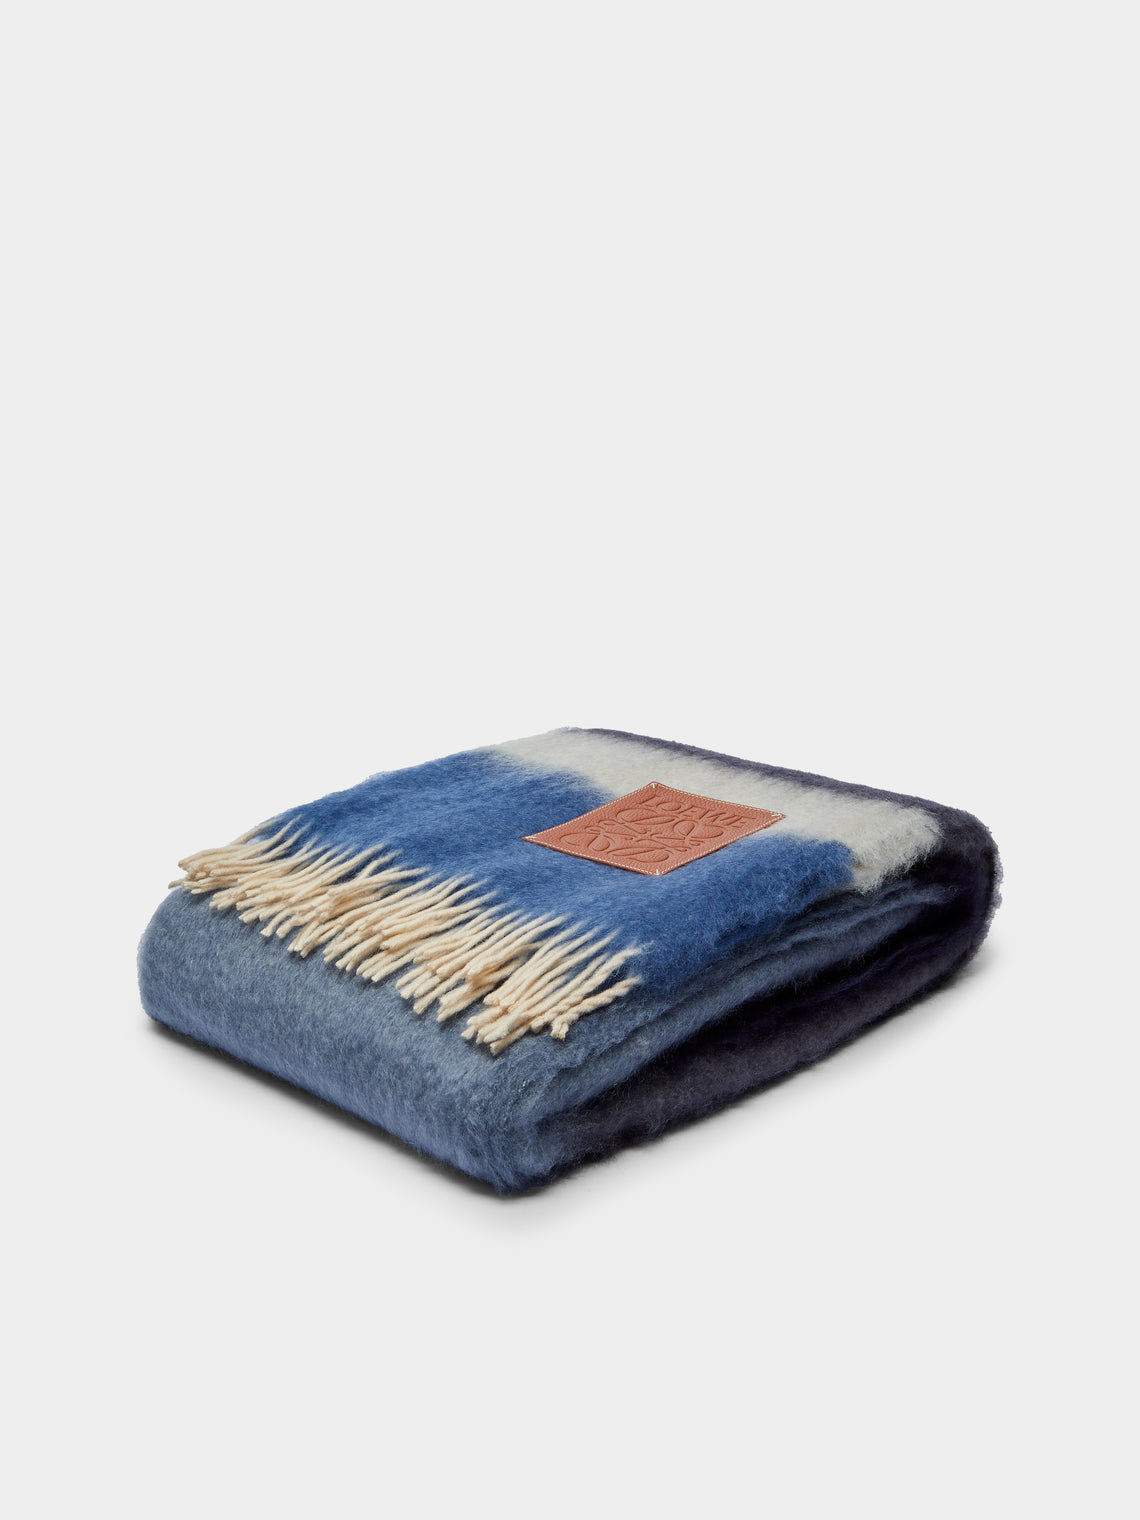 Loewe Home - Wool and Linen Striped Blanket -  - ABASK